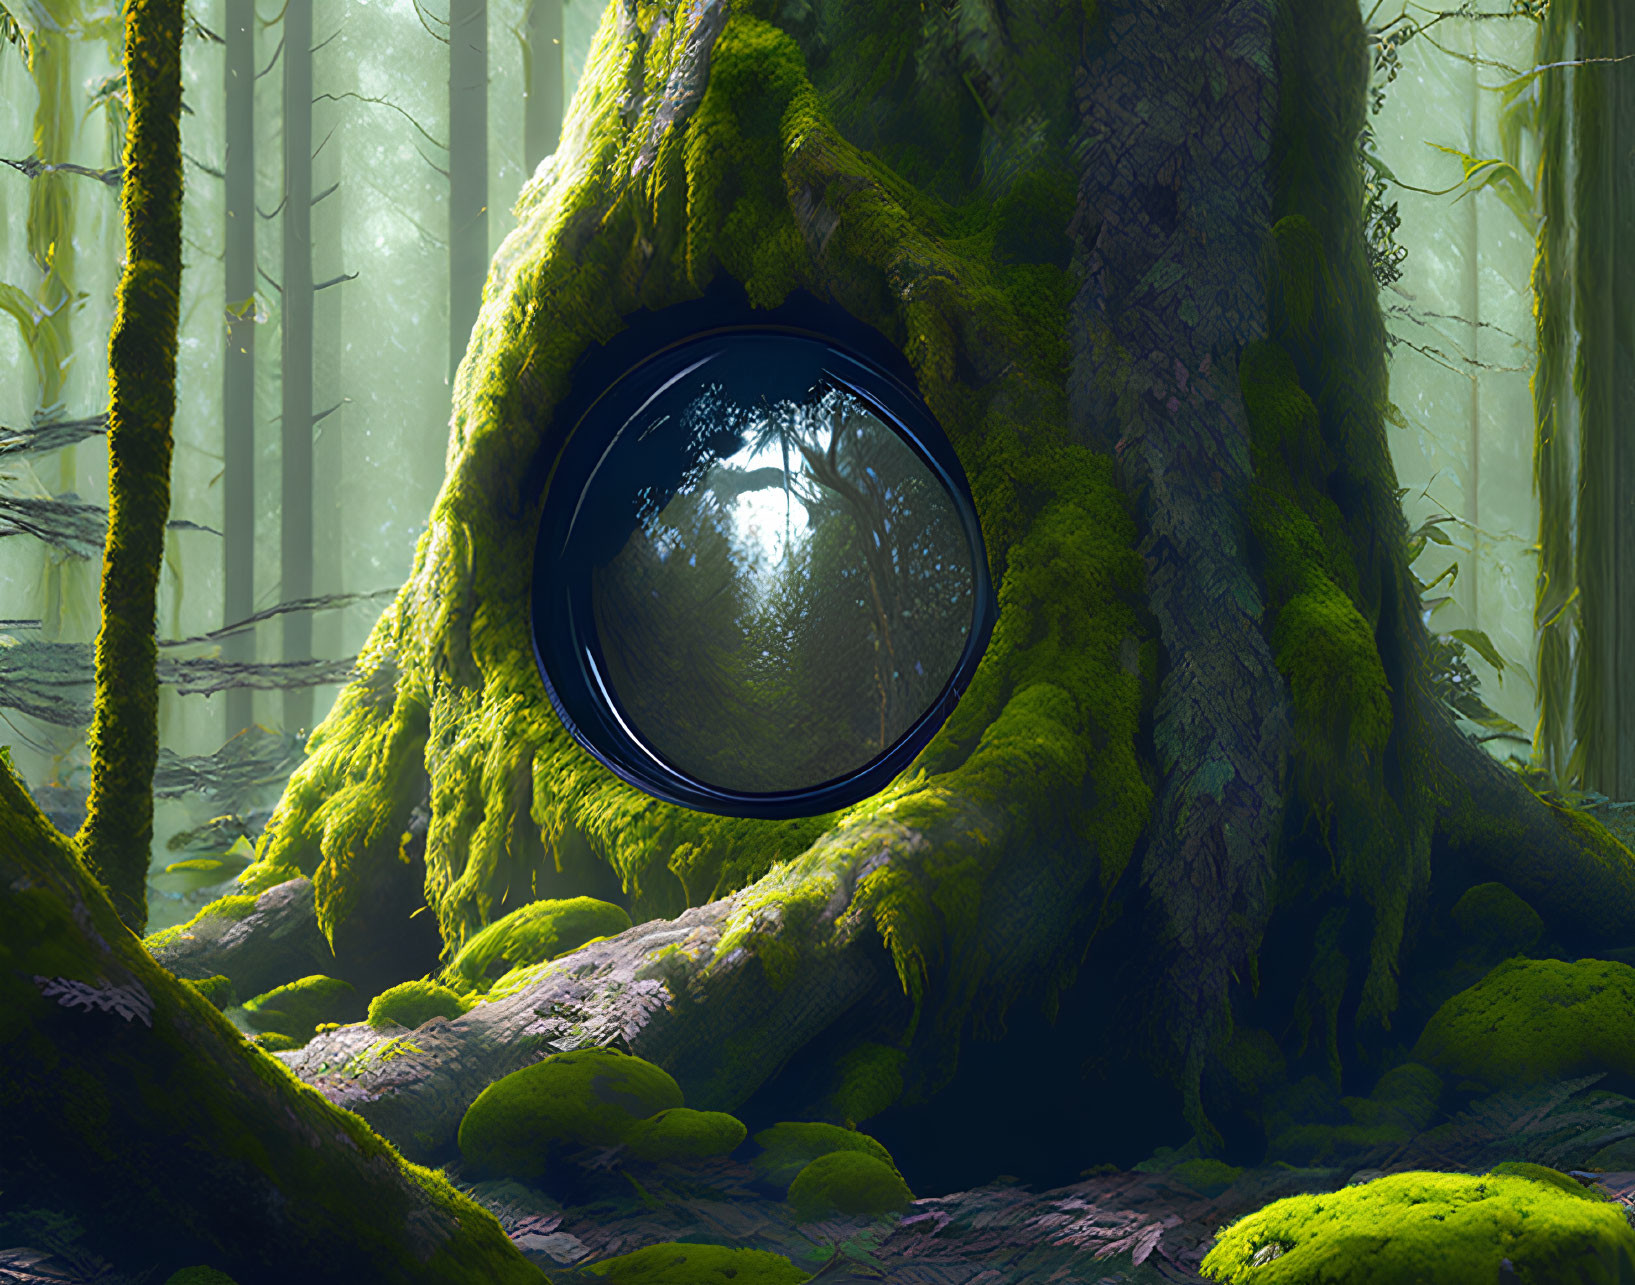 Mystical circular portal in tree trunk in sunlit forest